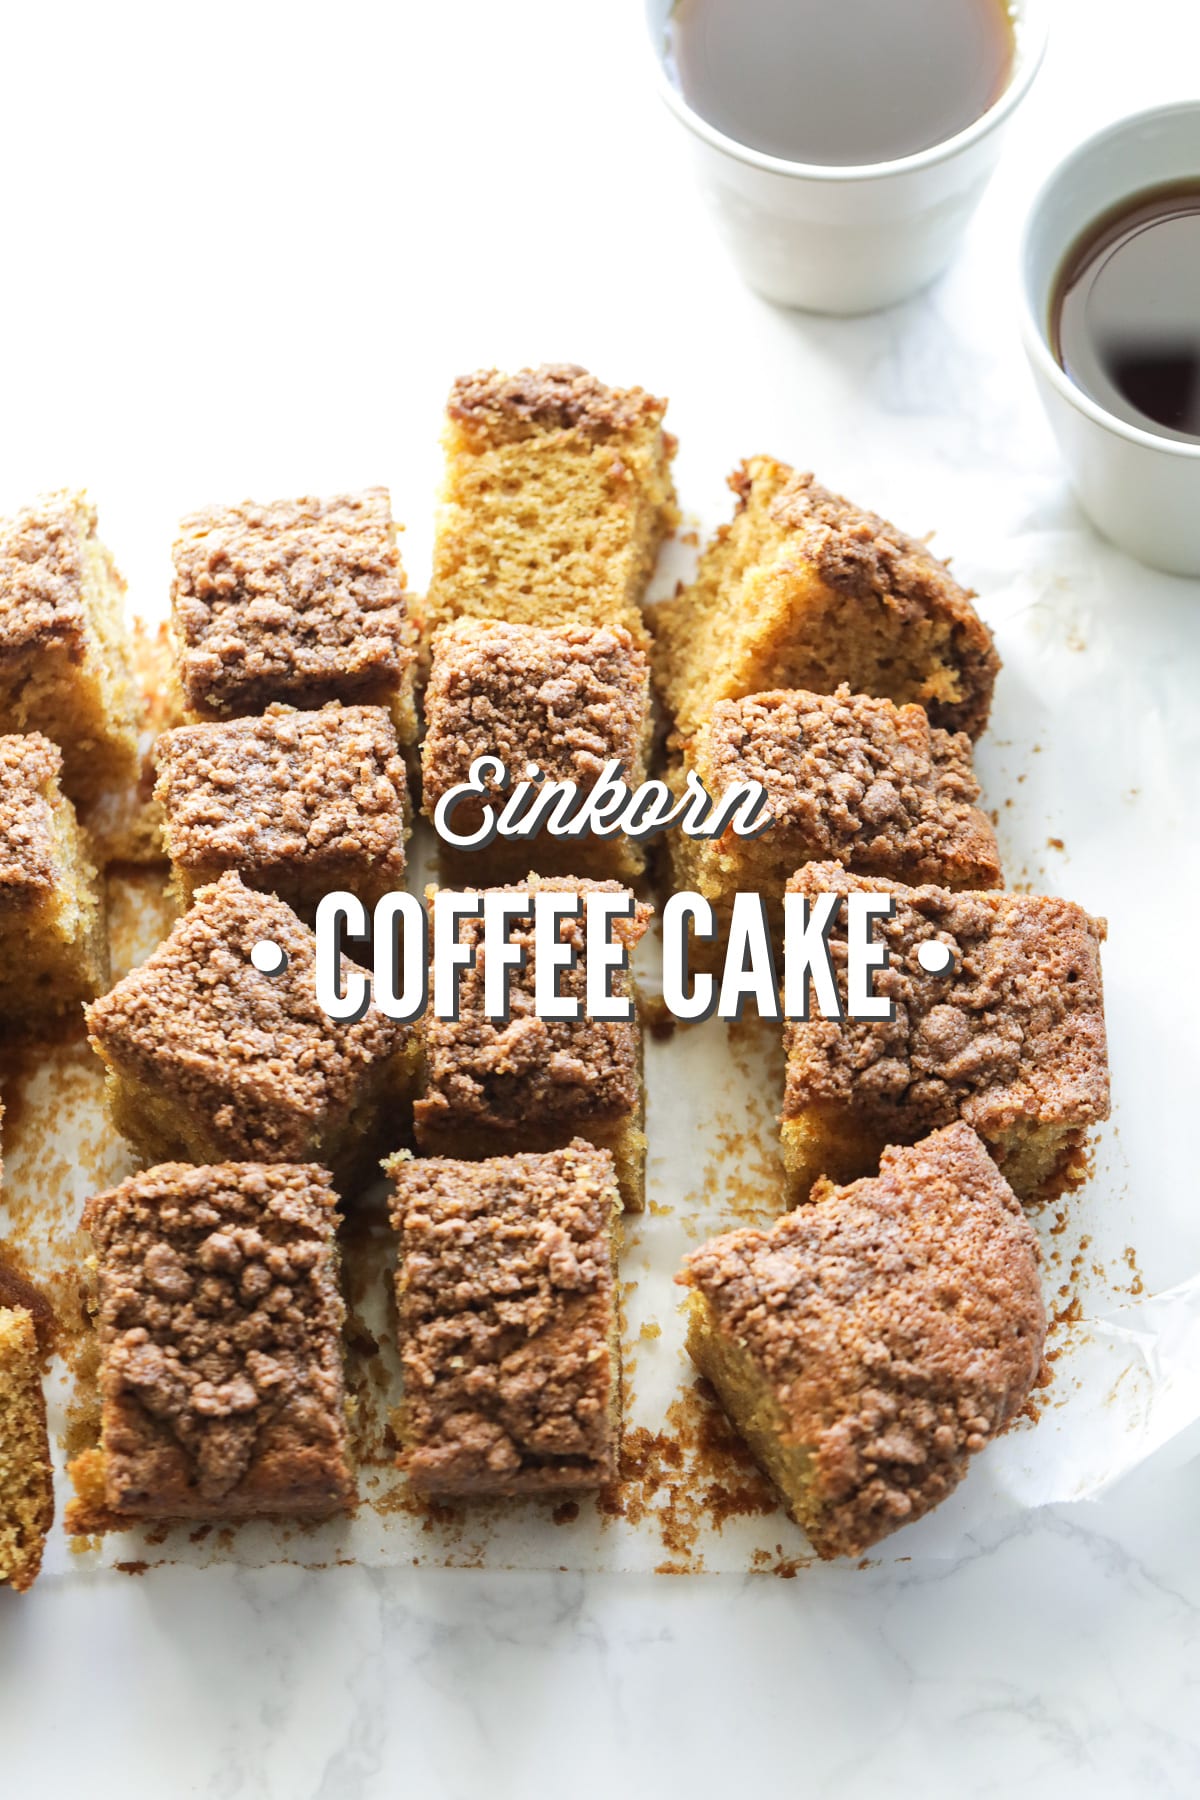 Easy Einkorn Coffee Cake with Cinnamon Streusel